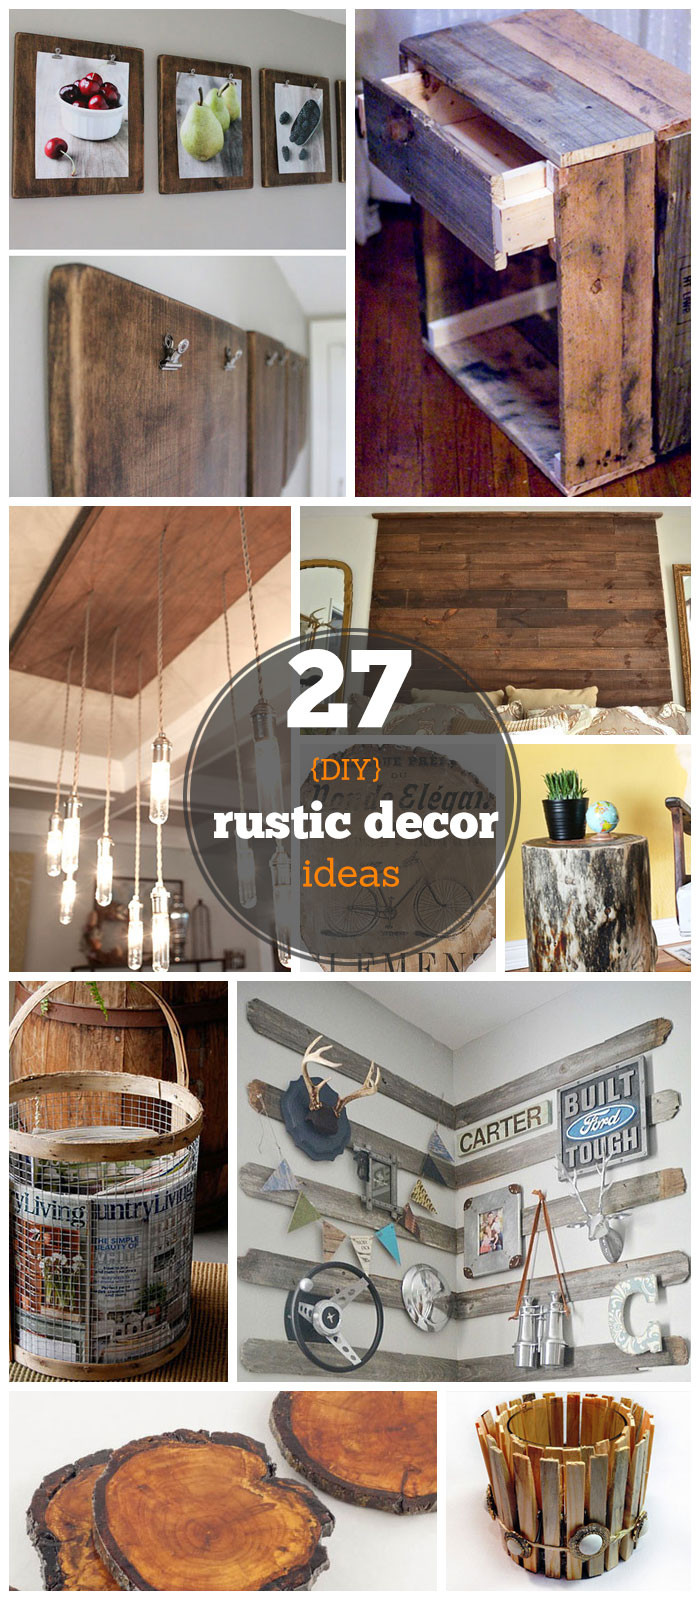 DIY Rustic Decorating Ideas
 27 DIY Rustic Decor Ideas for the Home